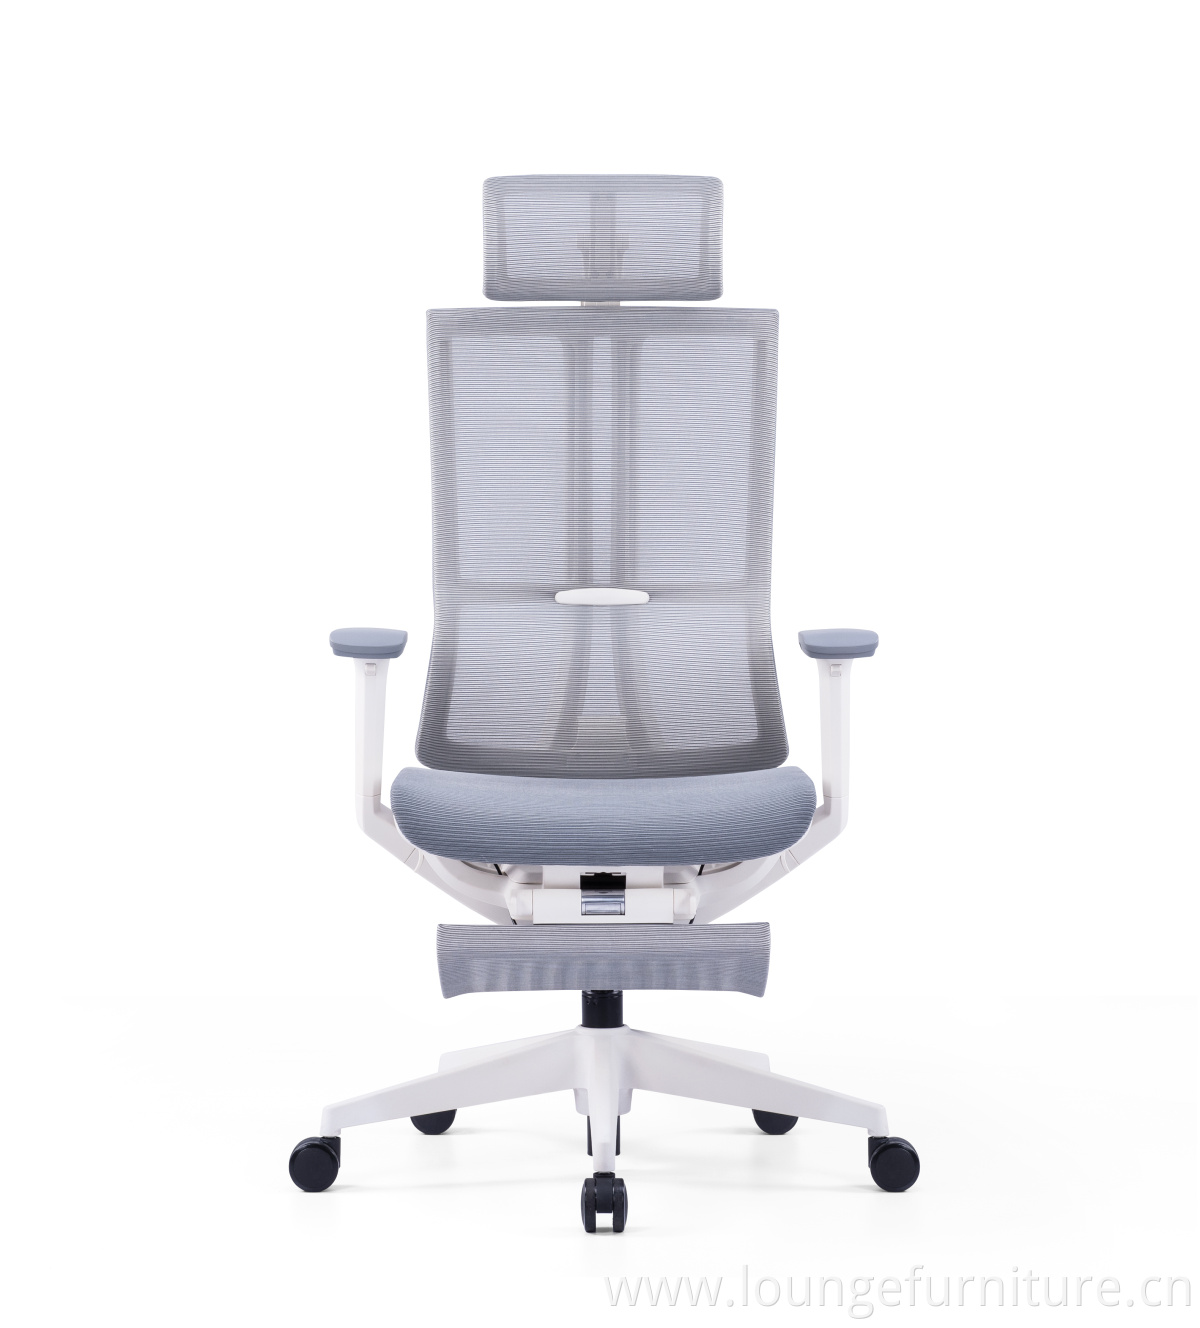 Low Cost Adjustable Work Mesh Designer Swivel Chair Office Comfort Chair